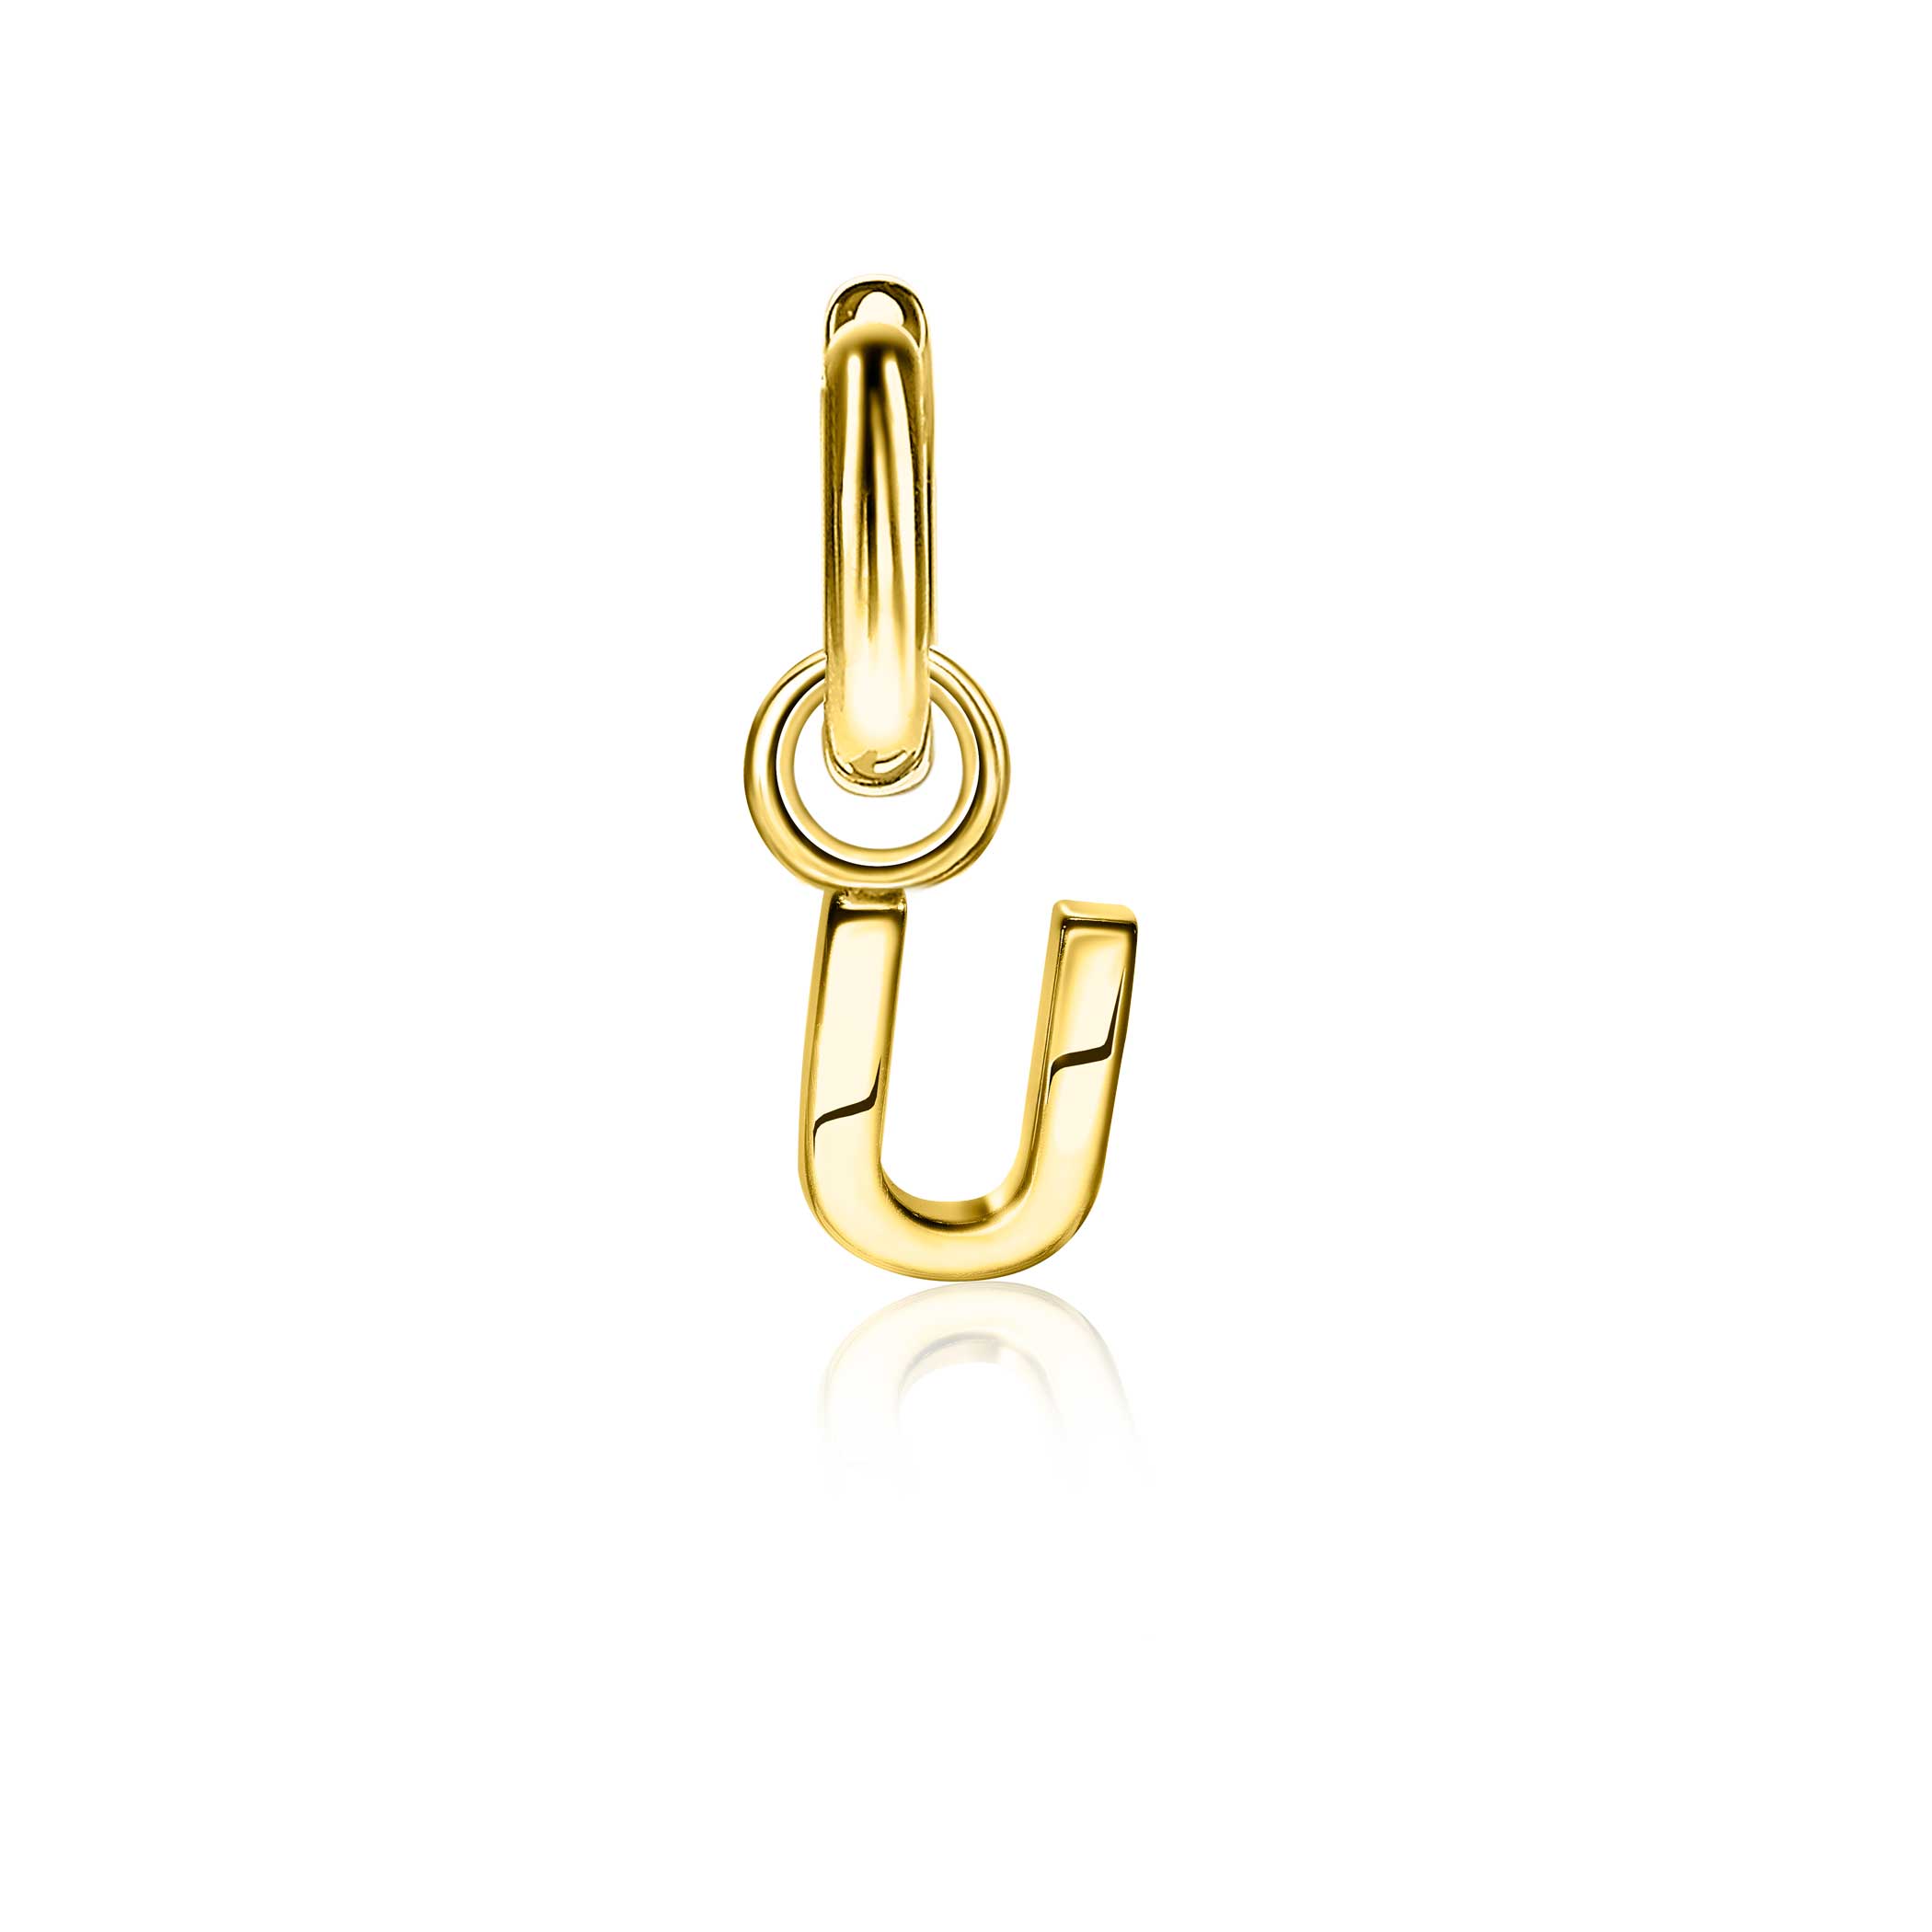 ZINZI Gold Plated Letter Earrings Pendant U price per piece ZICH2145U (excl. hoop earrings)